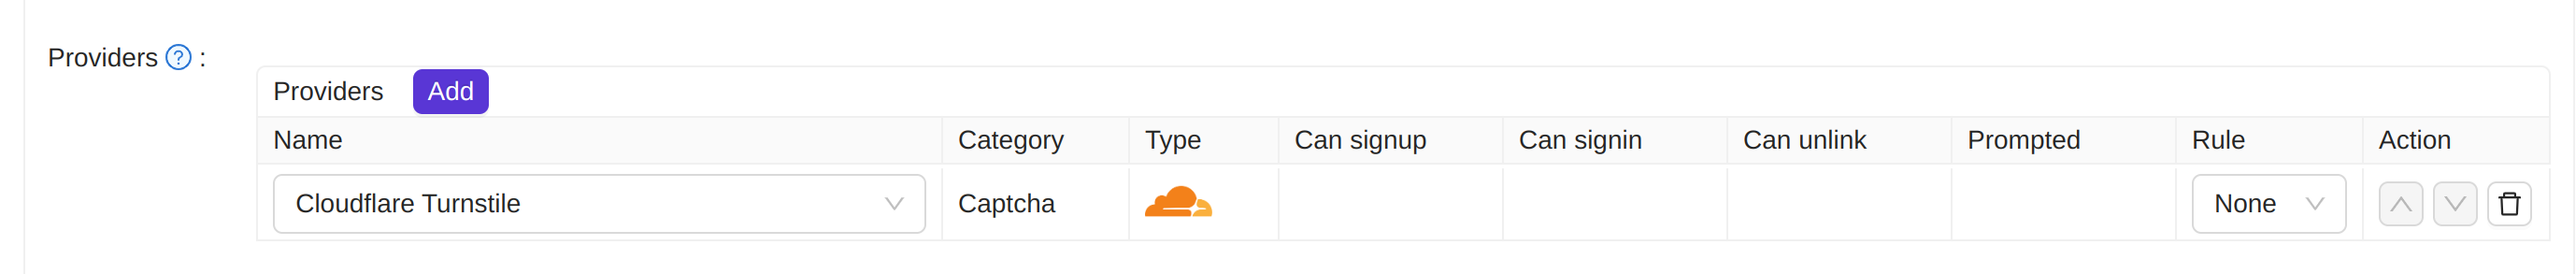 Cloudflare Turnstile provider app